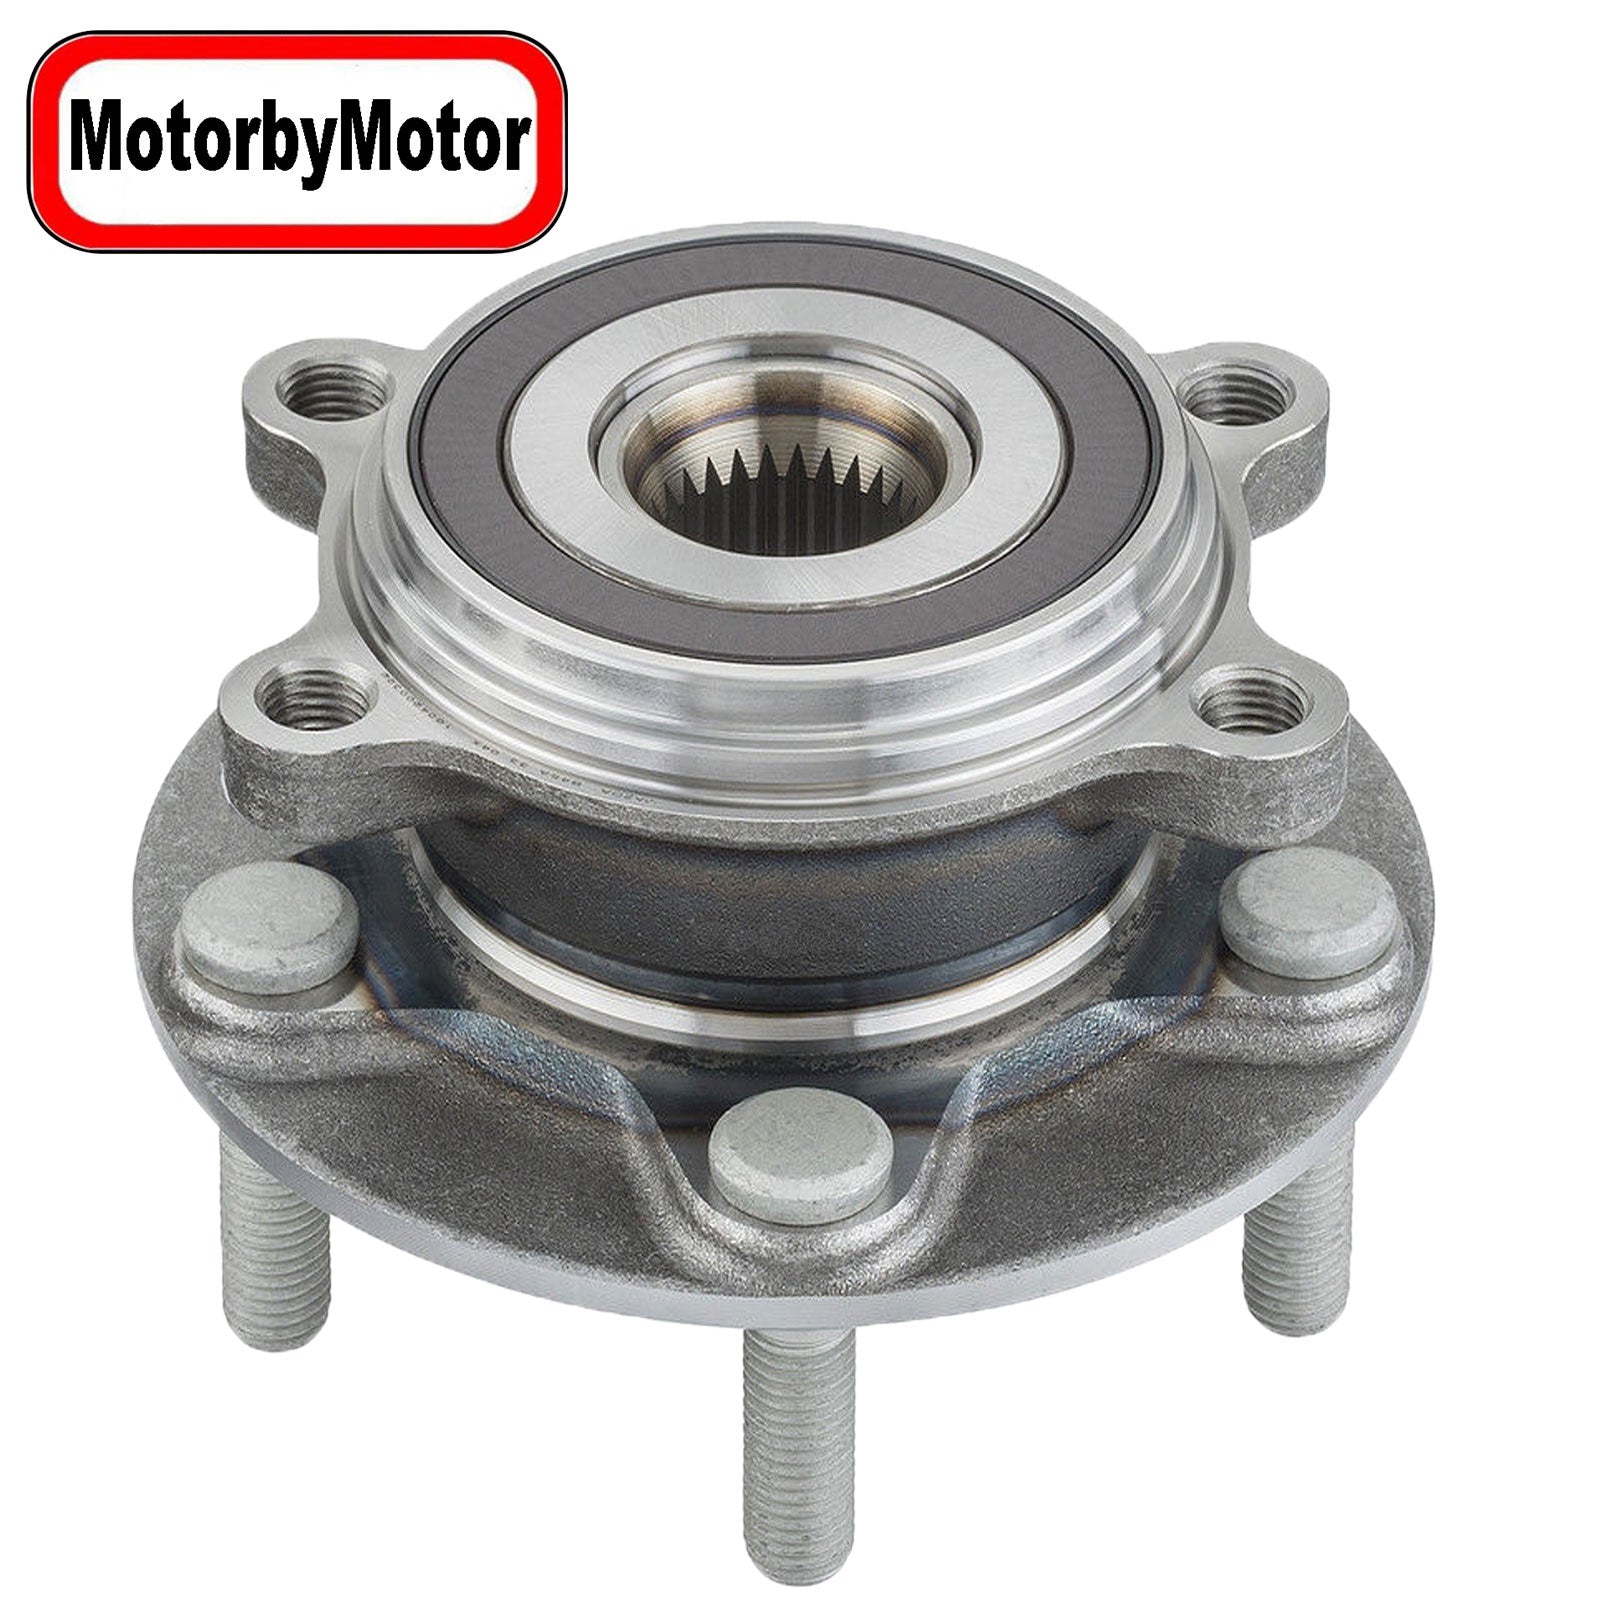 MotorbyMotor 513354 Front Wheel Bearing Hub Assembly 5 Lugs Mazda 3, Mazda CX-3 Low-Runout OE Directly Replace Hub Bearing w/ABS MotorbyMotor